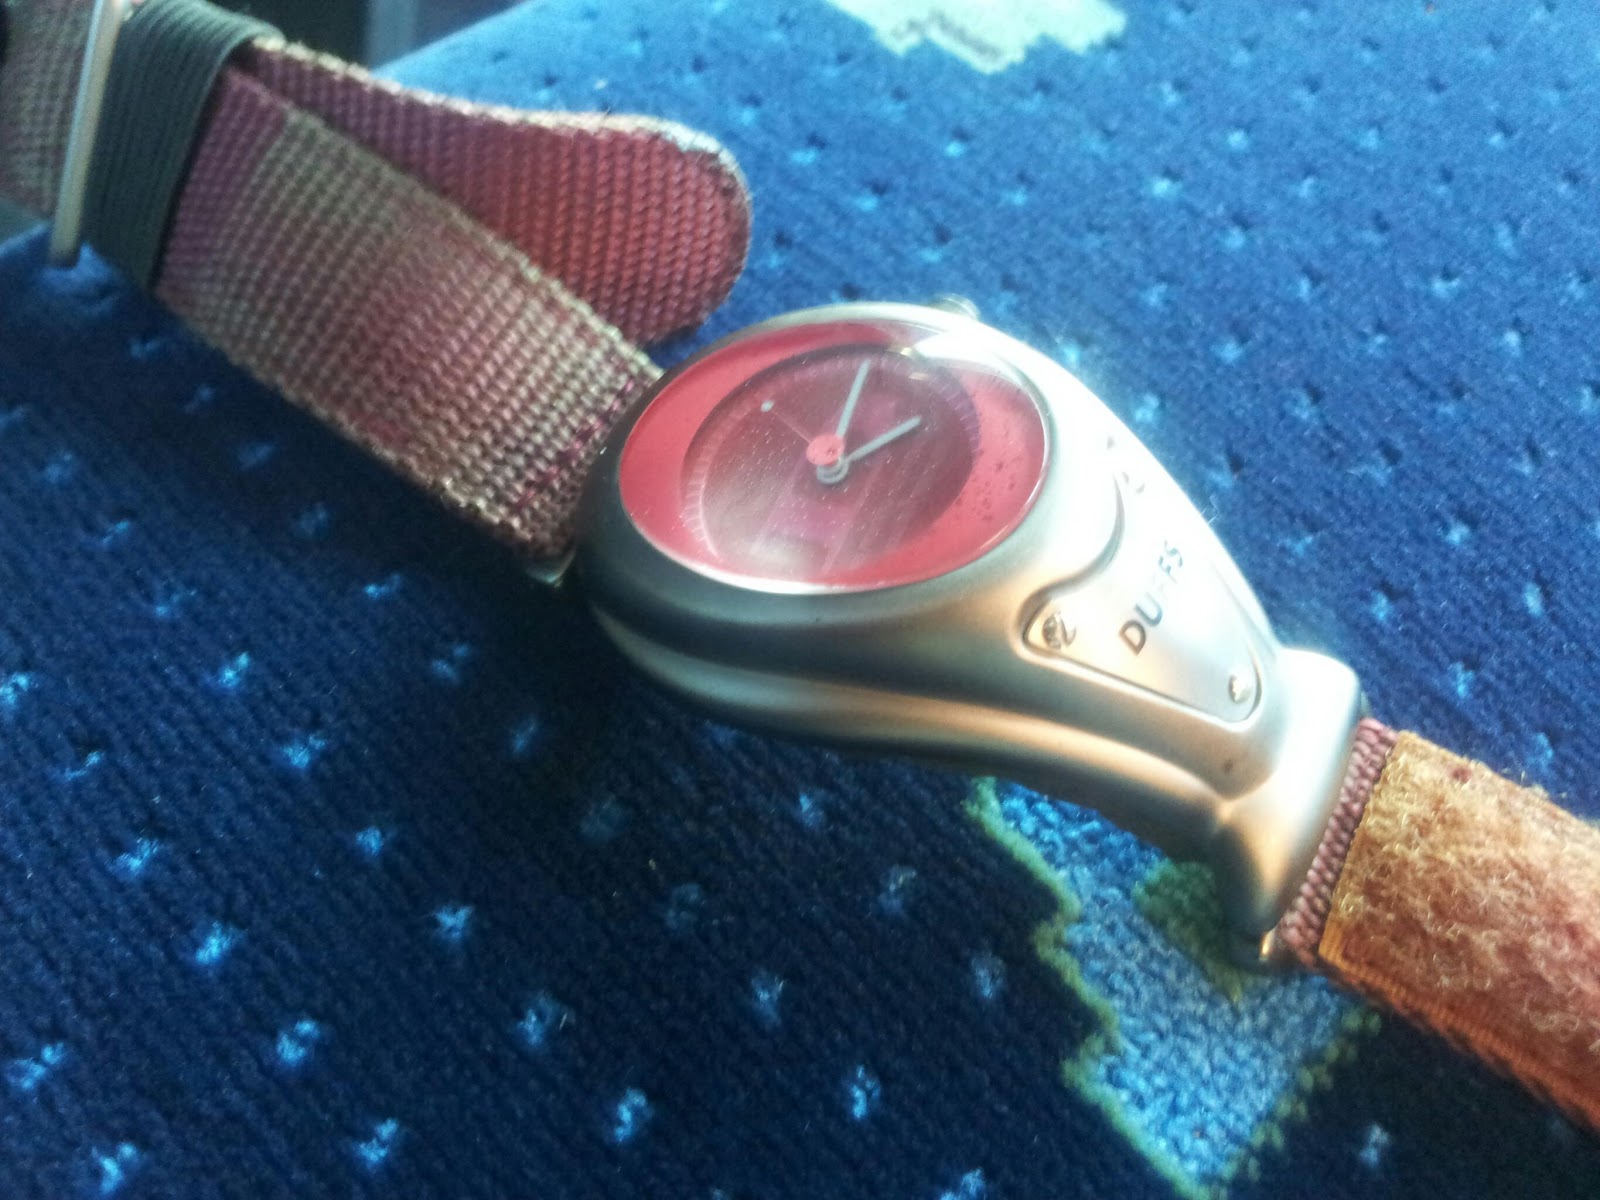 Side watch. Nordic Seaside часы наручные Nordic. Часы IMC Manufactoria цена. Lund Lille купить часы. Цена часов Sentra z1303.